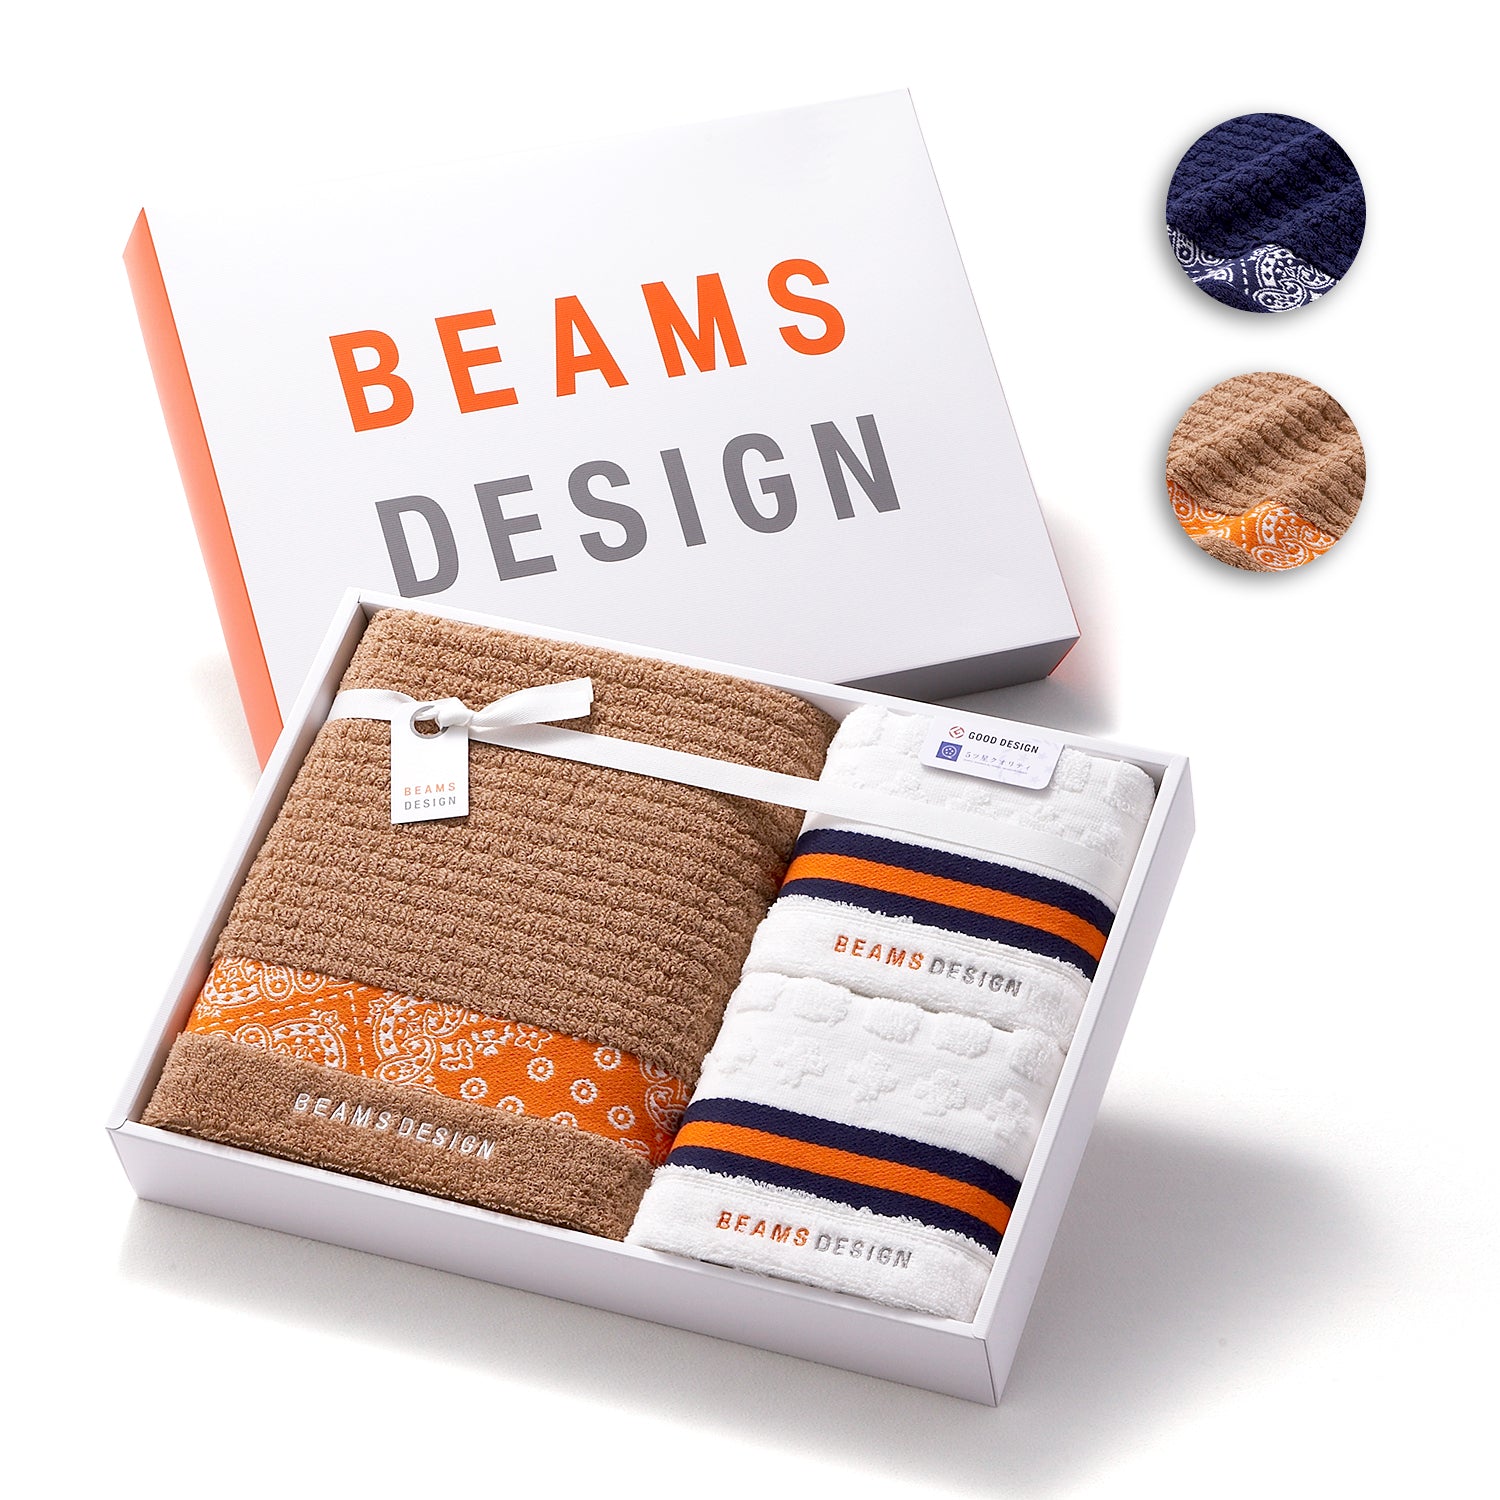 BEAMS DESIGN』 ラインバンダナ タオルギフト フェイスタオル2P/バス